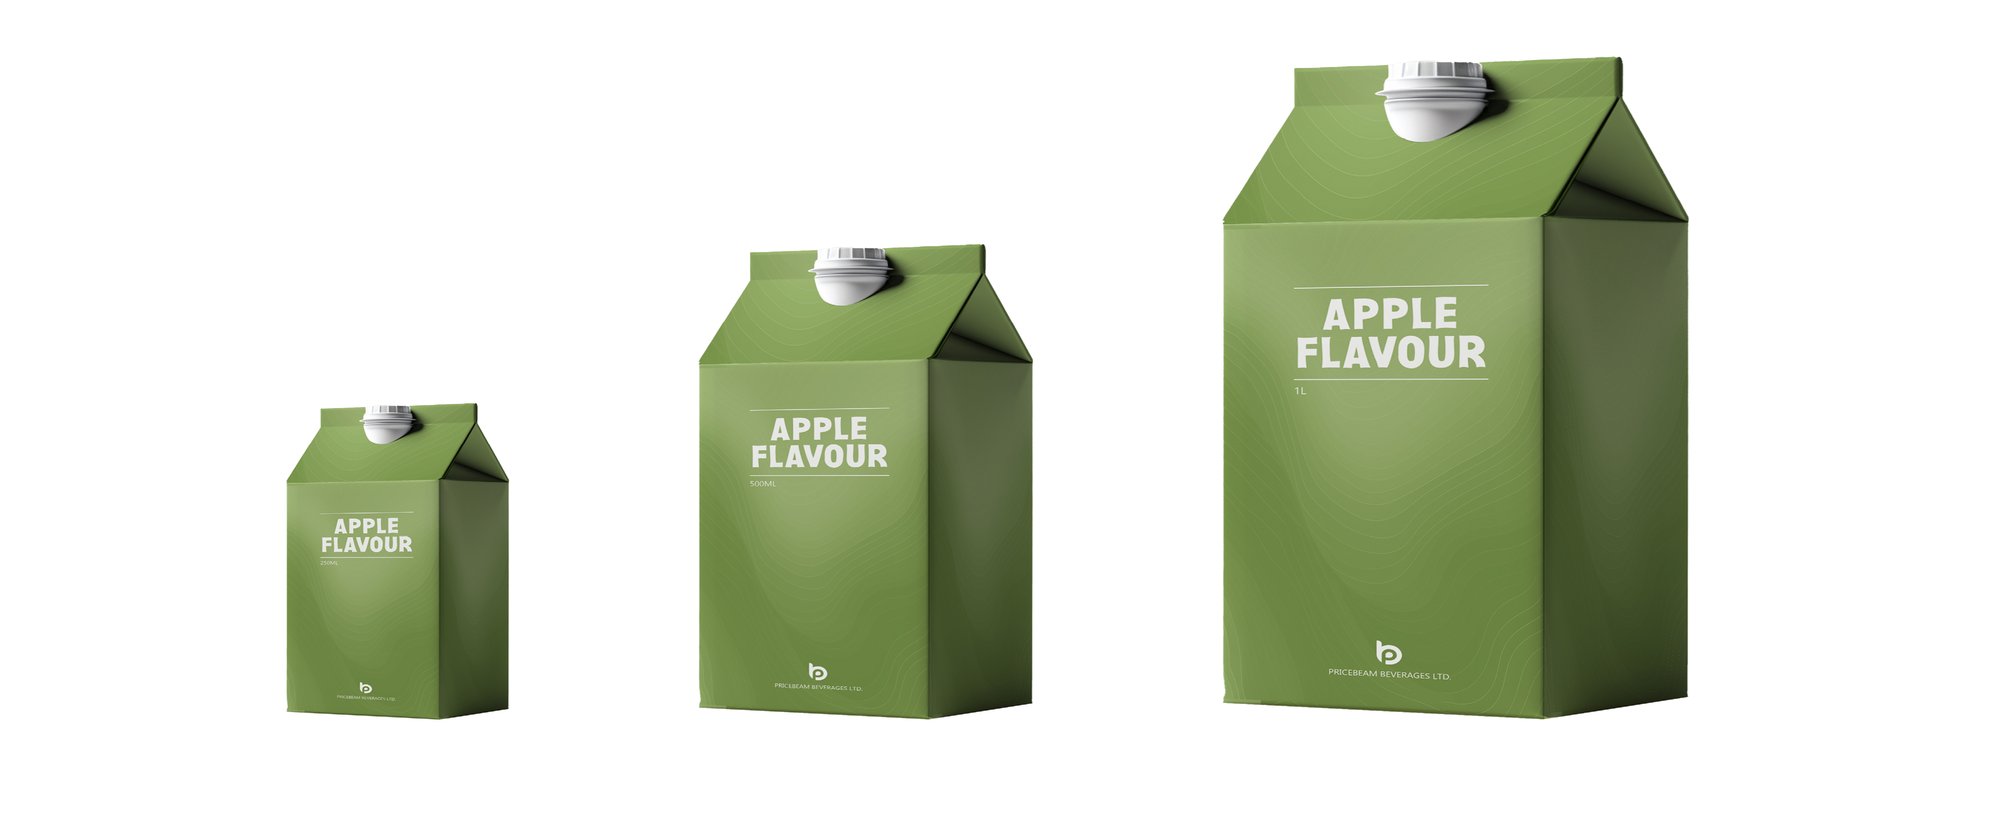 PB apple flavour